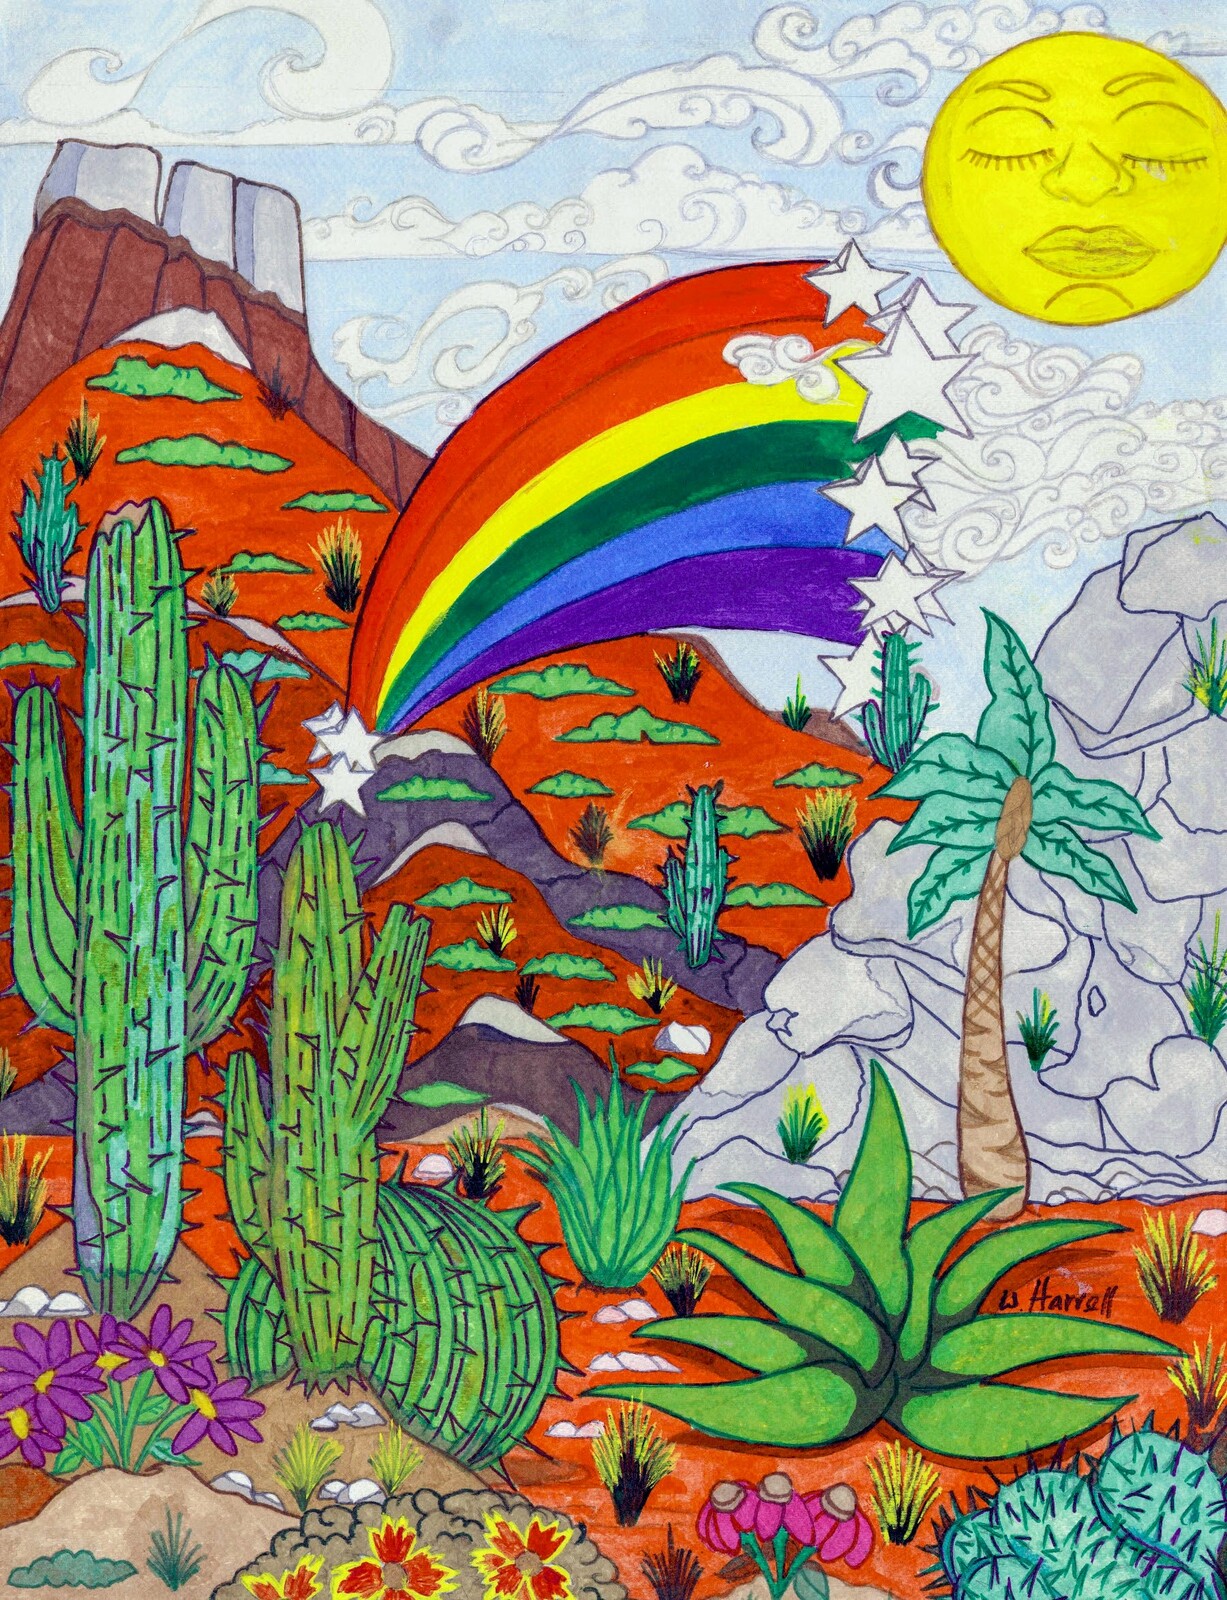 “ Rainbow in The Desert “